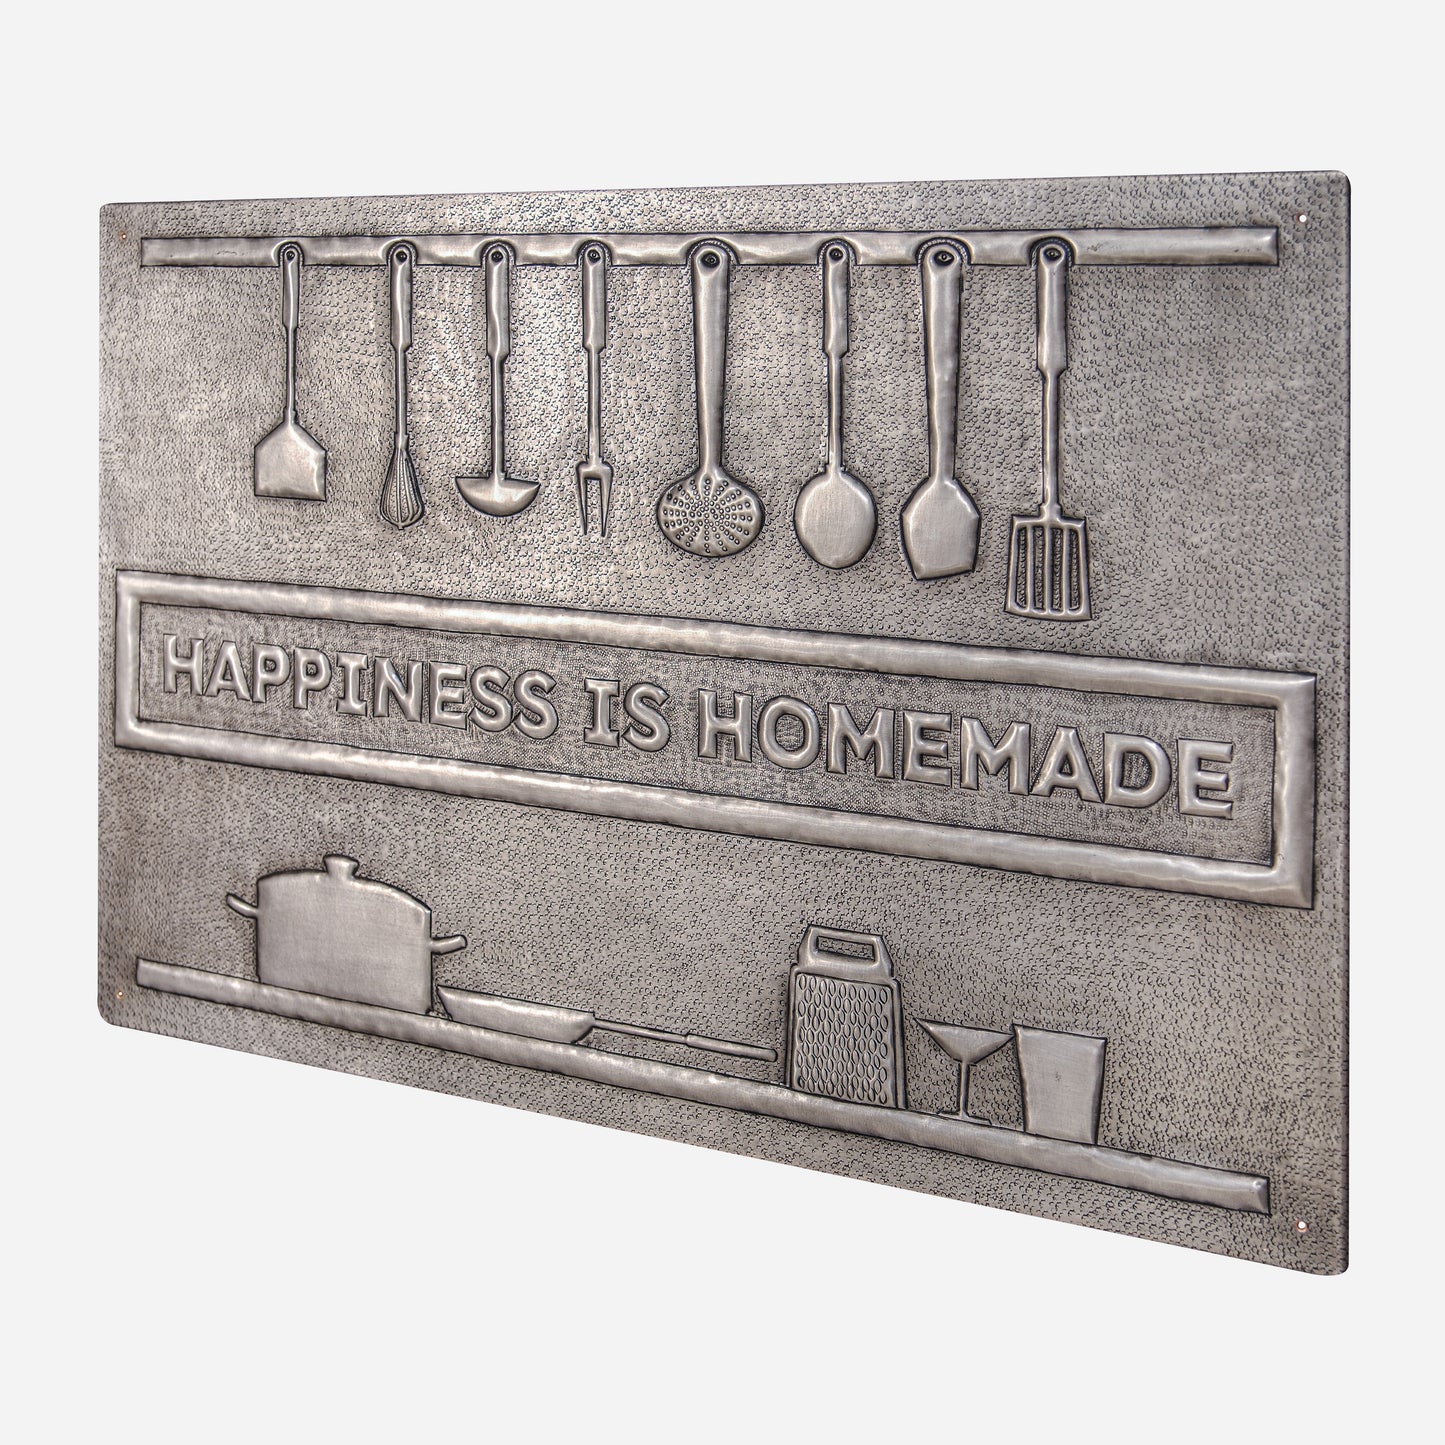 "Happiness is Homemade" Copper Kitchen Backsplash Tile